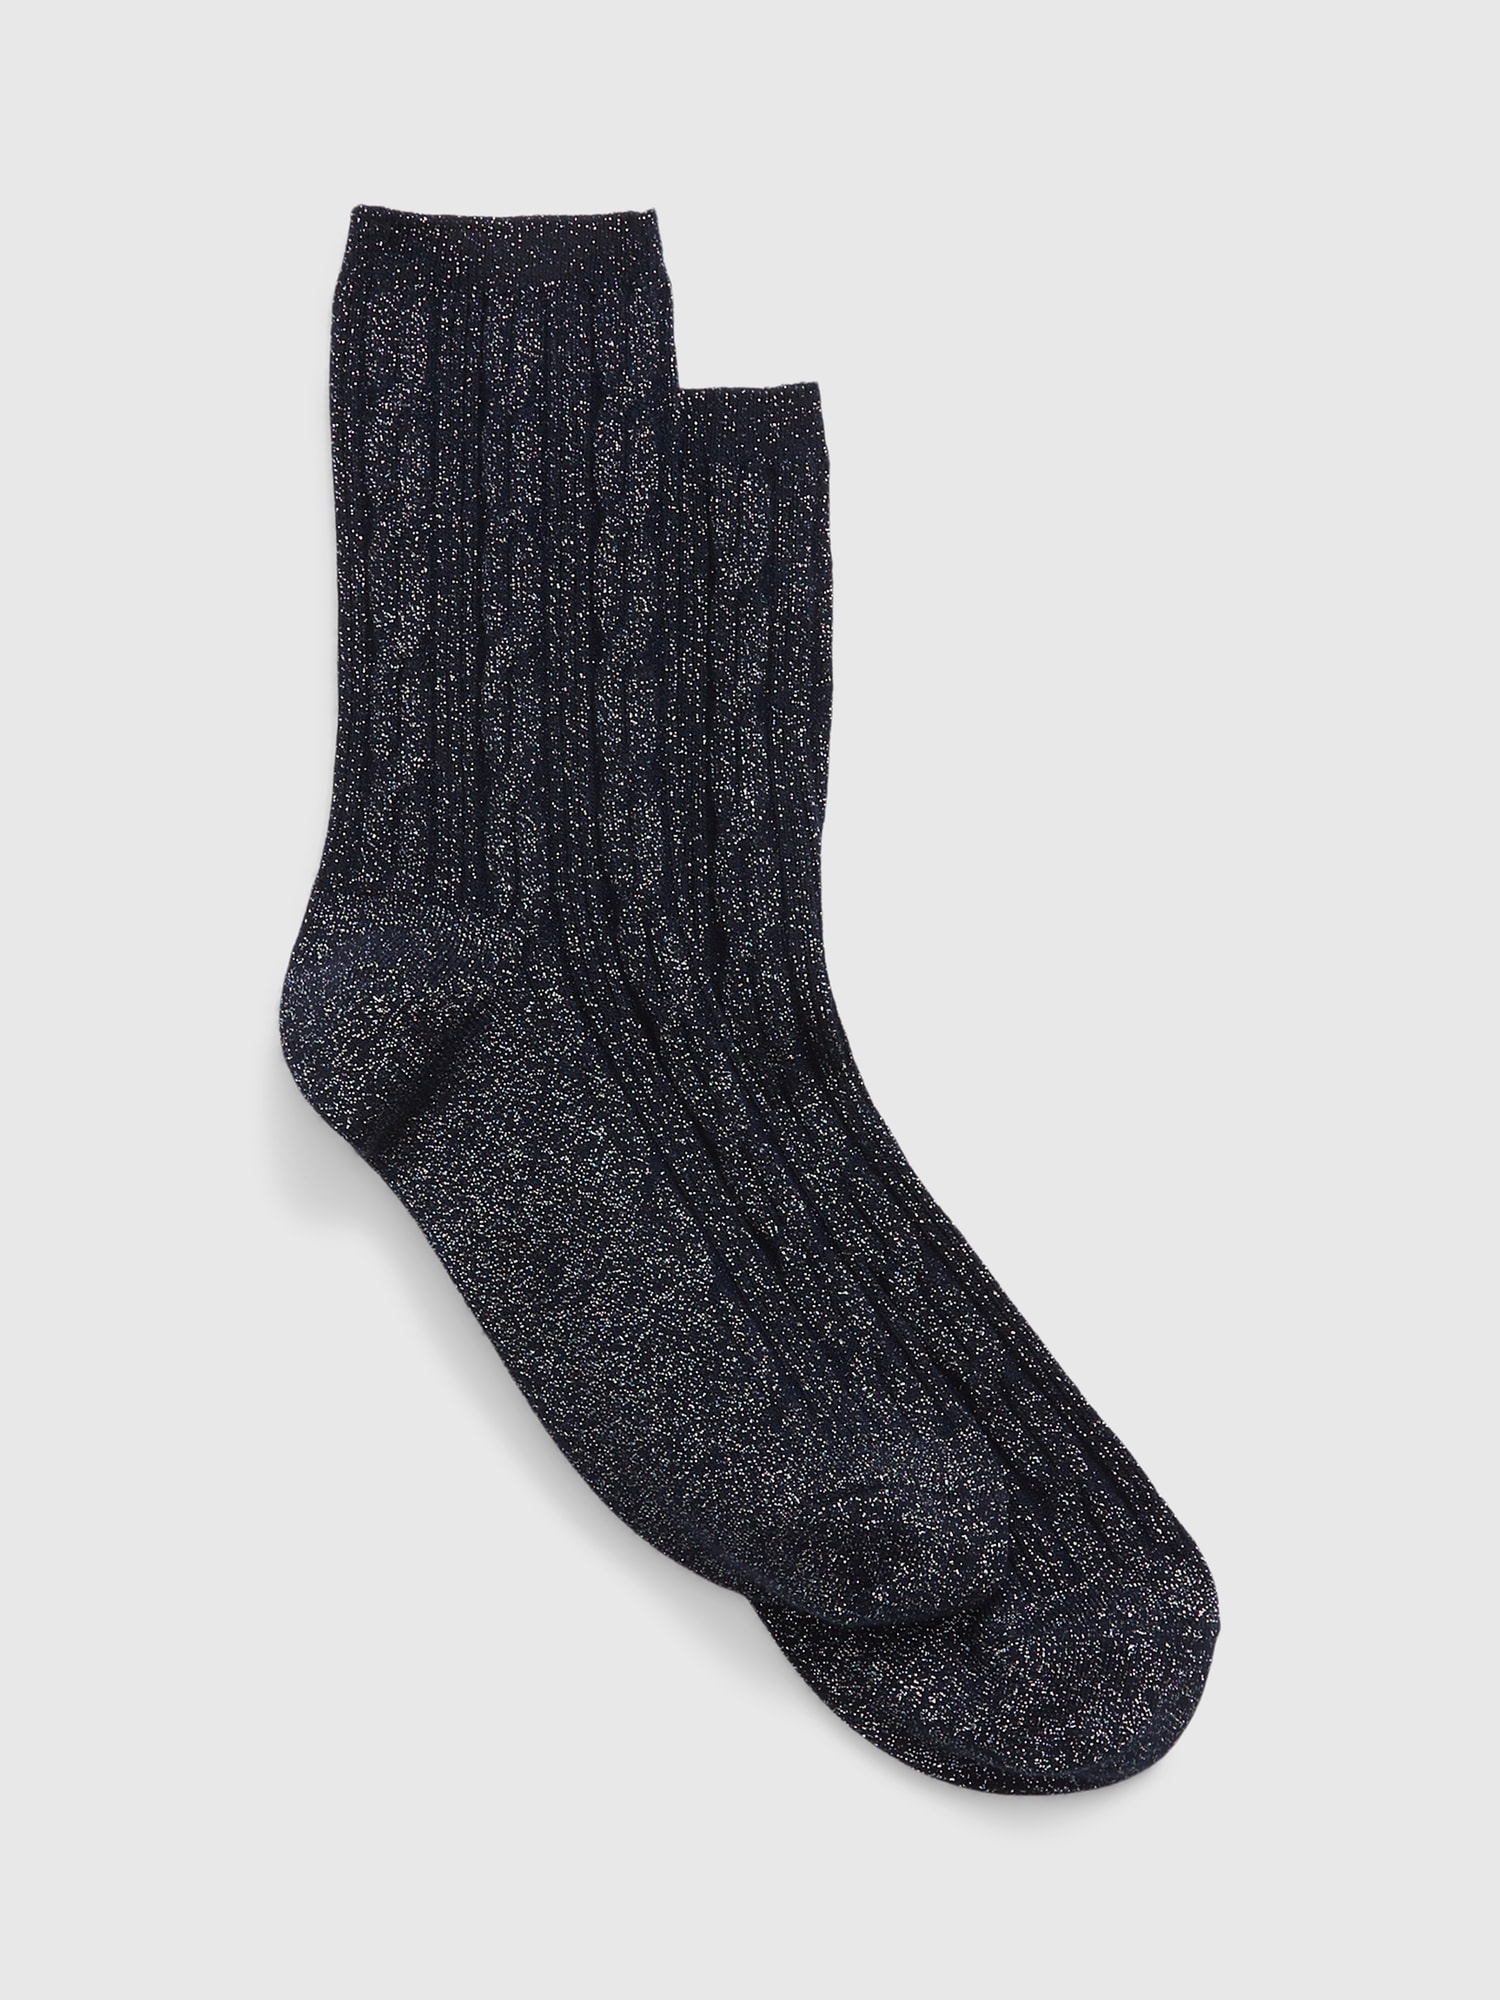 Glitter Cable-Knit Crew Socks | Gap